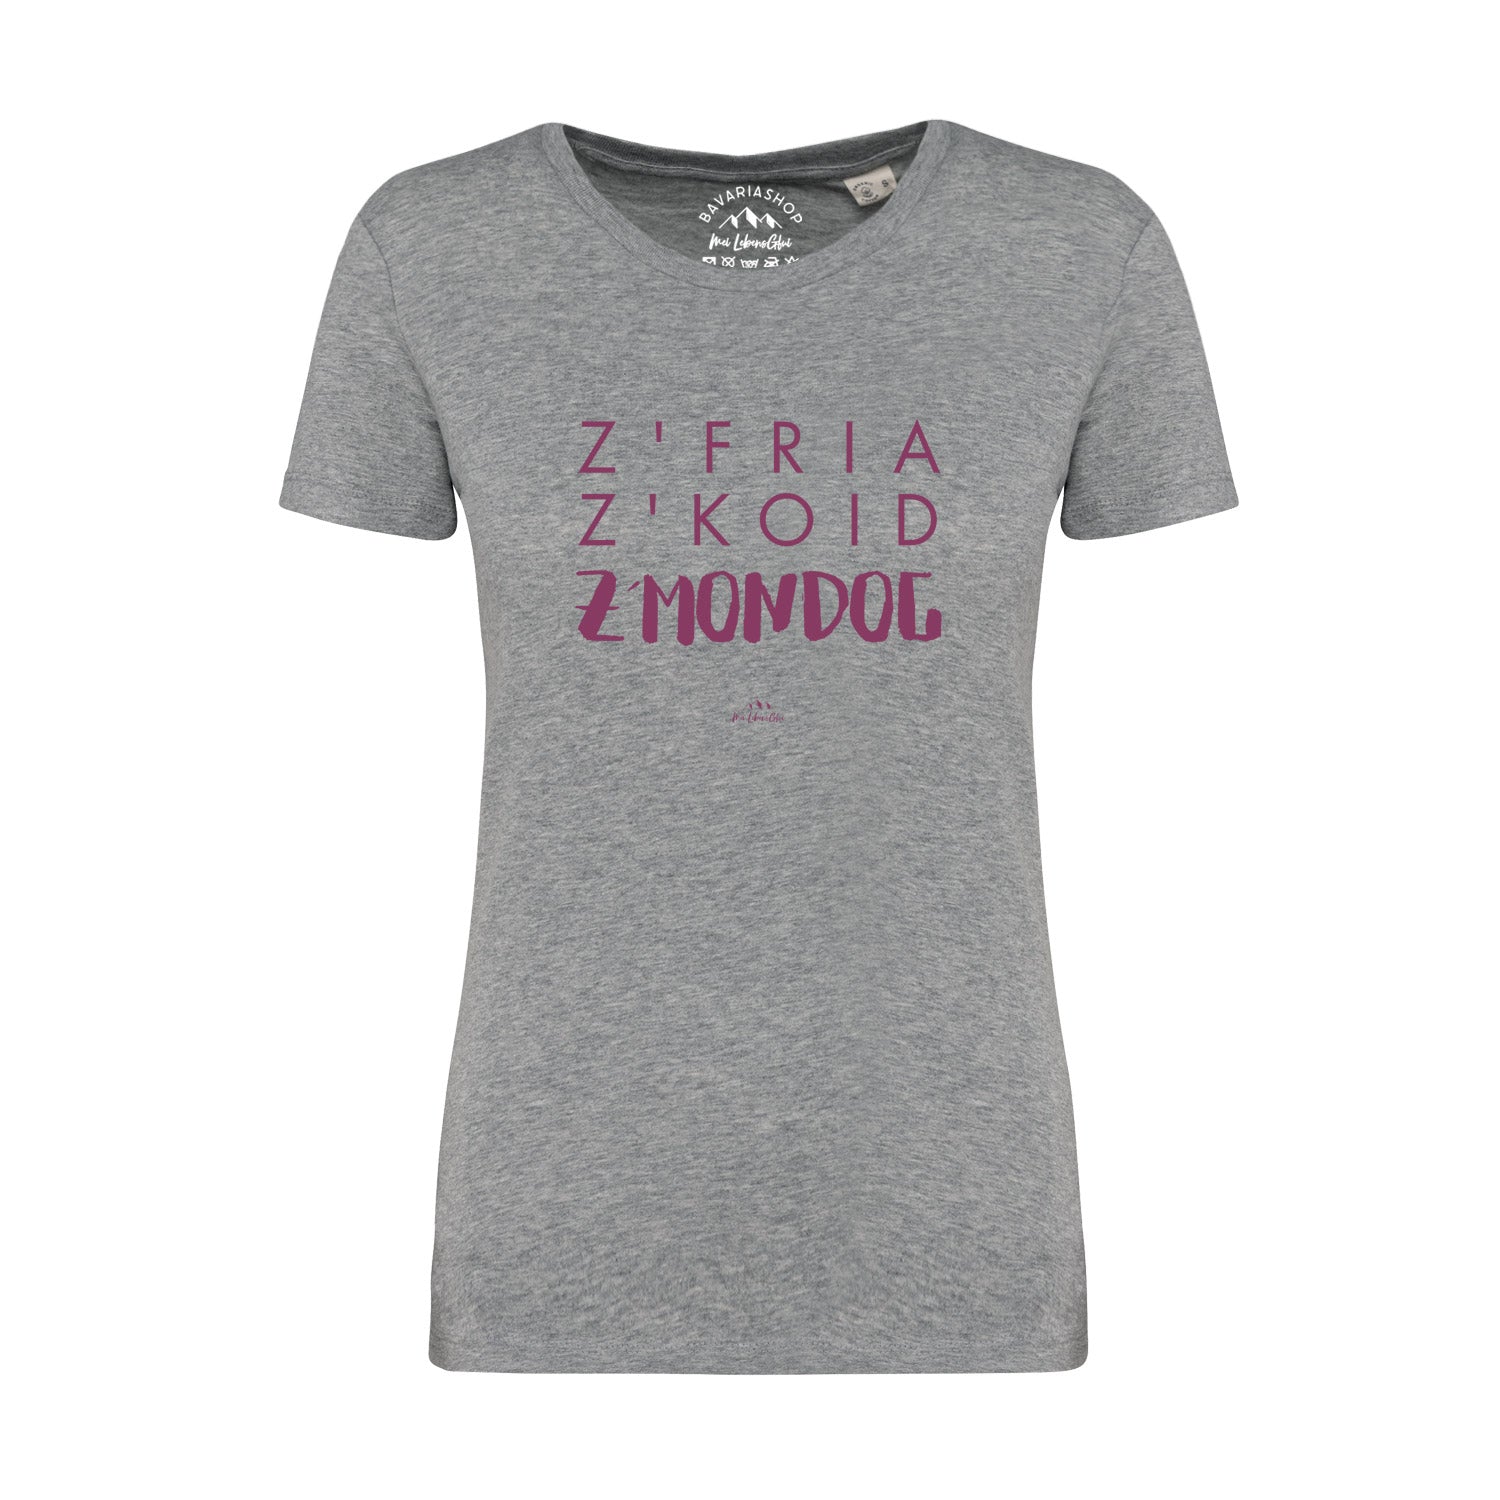 Damen T-Shirt "Z'fria z'koid z'Mondog..."